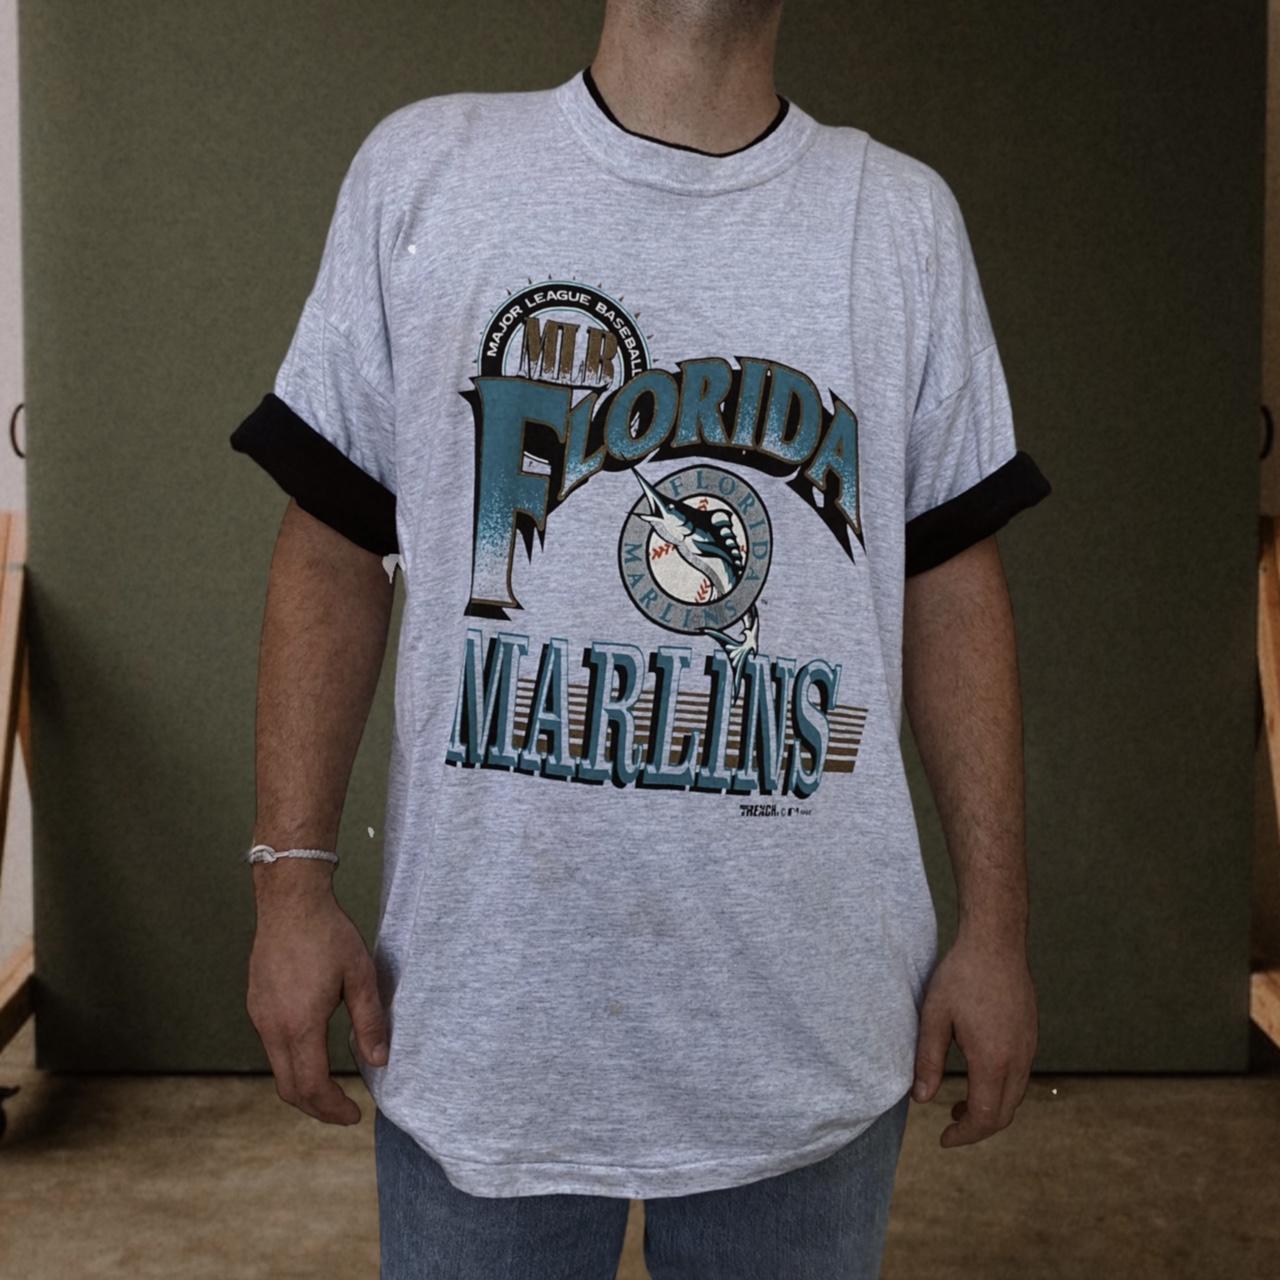 Vintage Florida Marlins Tee Shirt